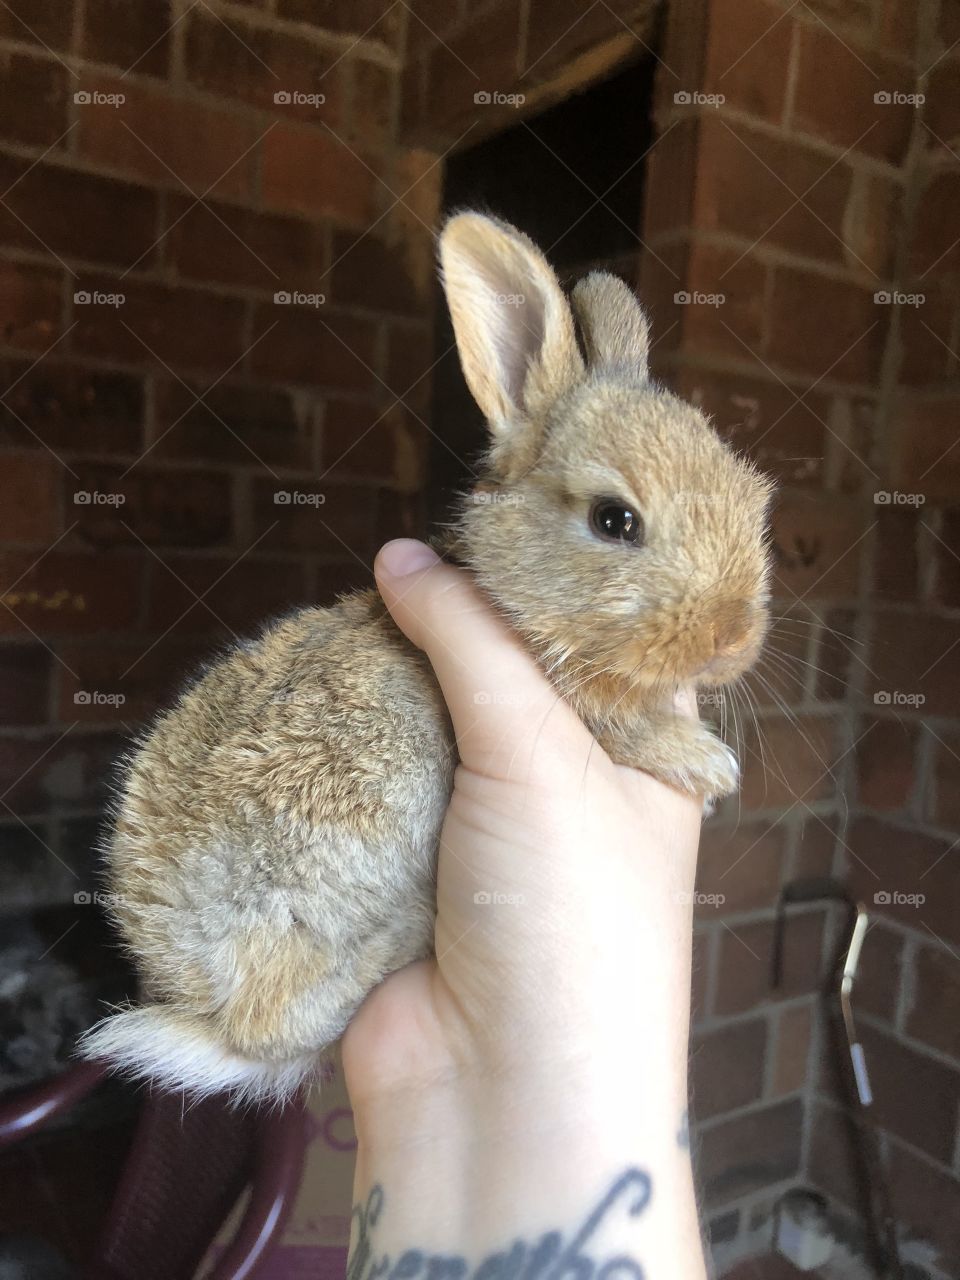 Cute baby bunny with big ears